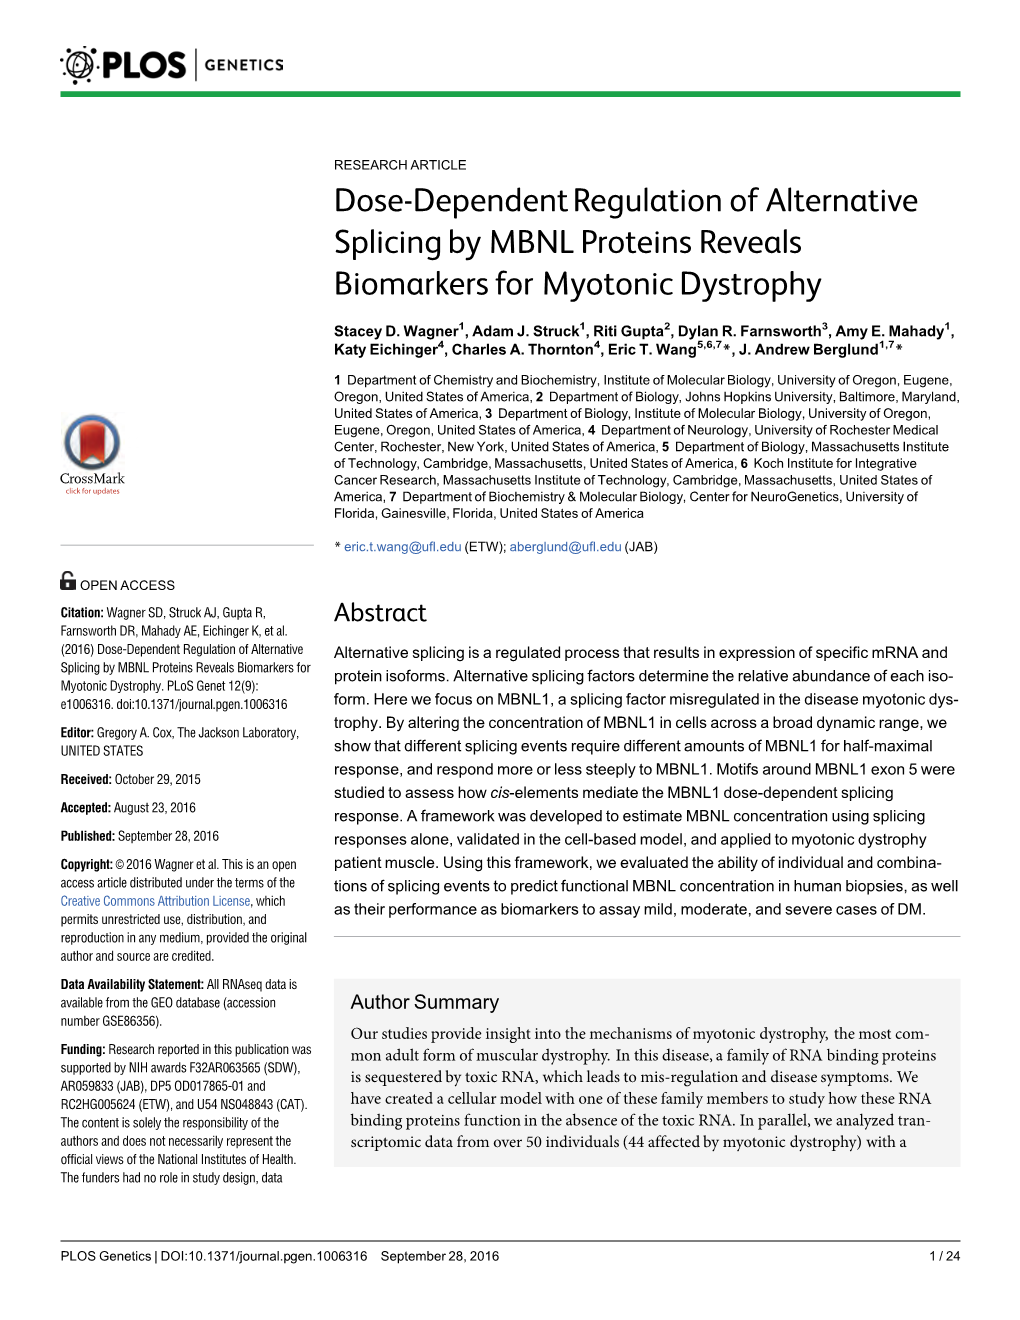 Dose-Dependent Regulation of Alternative Splicing by MBNL